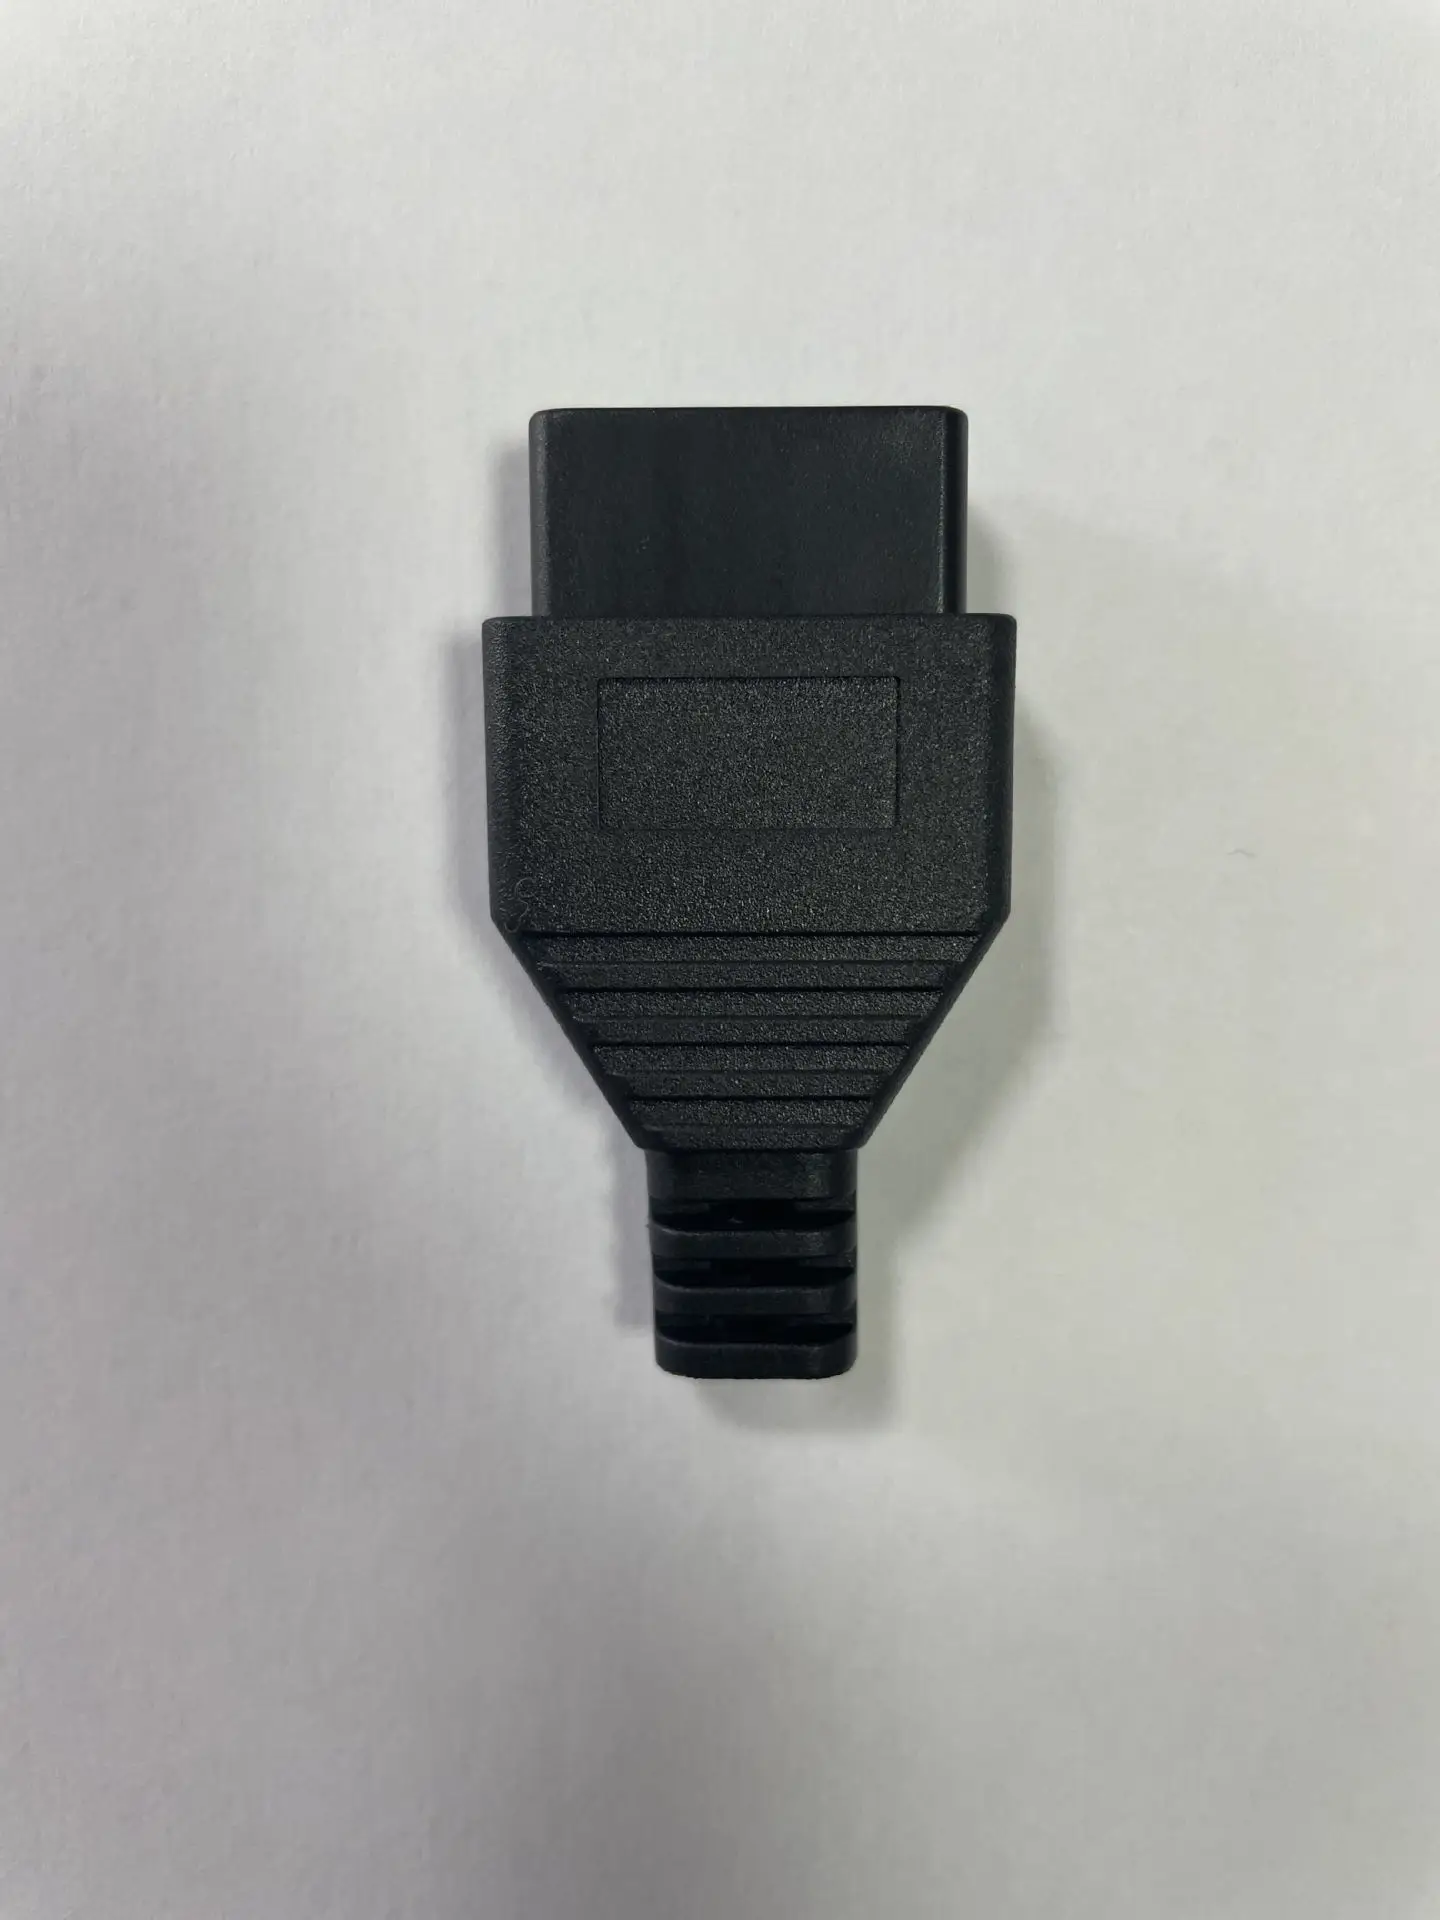 

10 PCS Male Connector Plug 15 Pin Controller Port Connector for SNK /FC for NEOGEO /CD Controller Plug Repair Parts